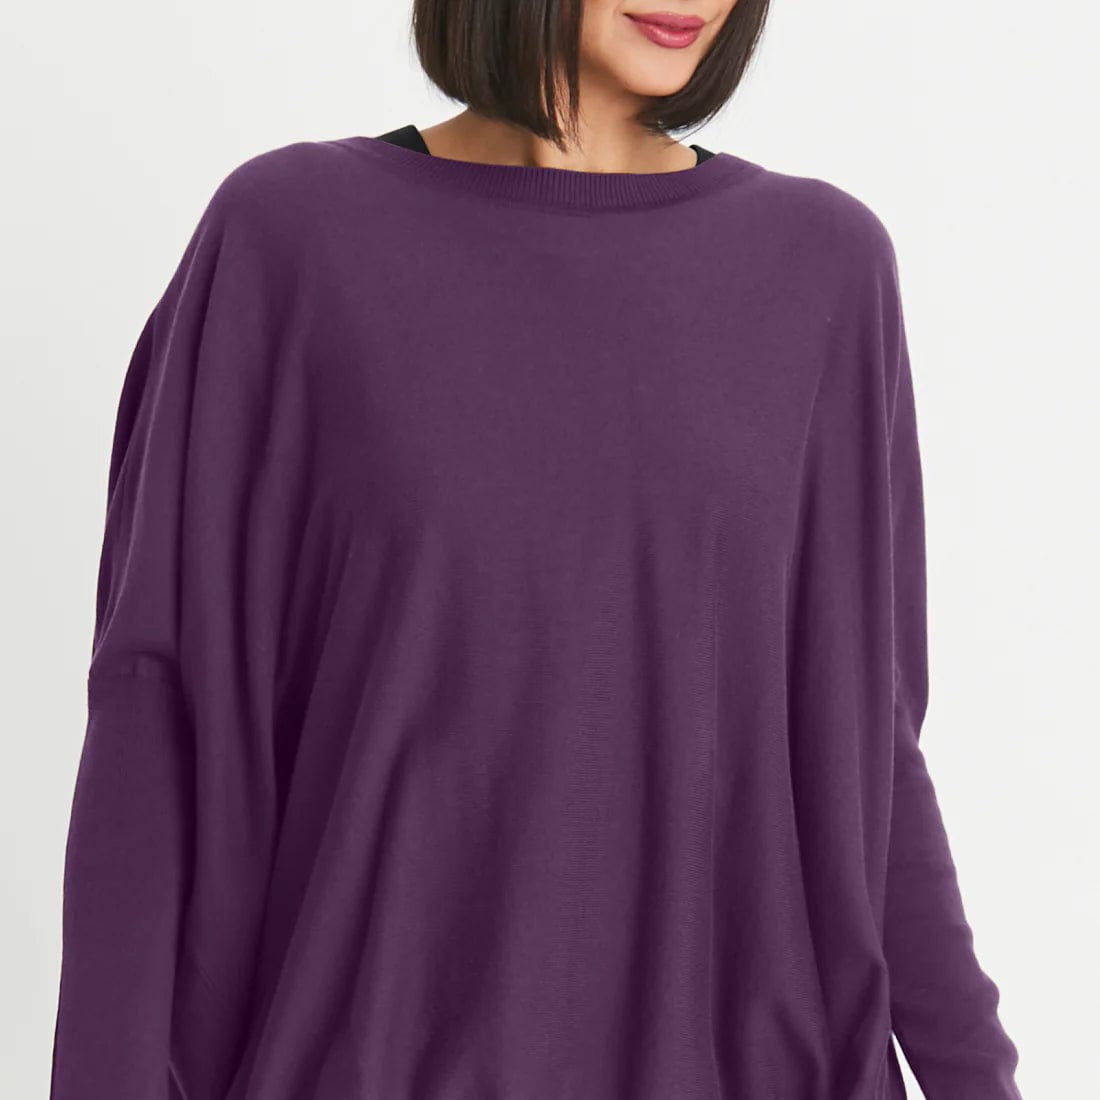 PLANET by Lauren G Women's Sweaters Grape / One Size Pima Cotton Oversized Crew Neck Knit